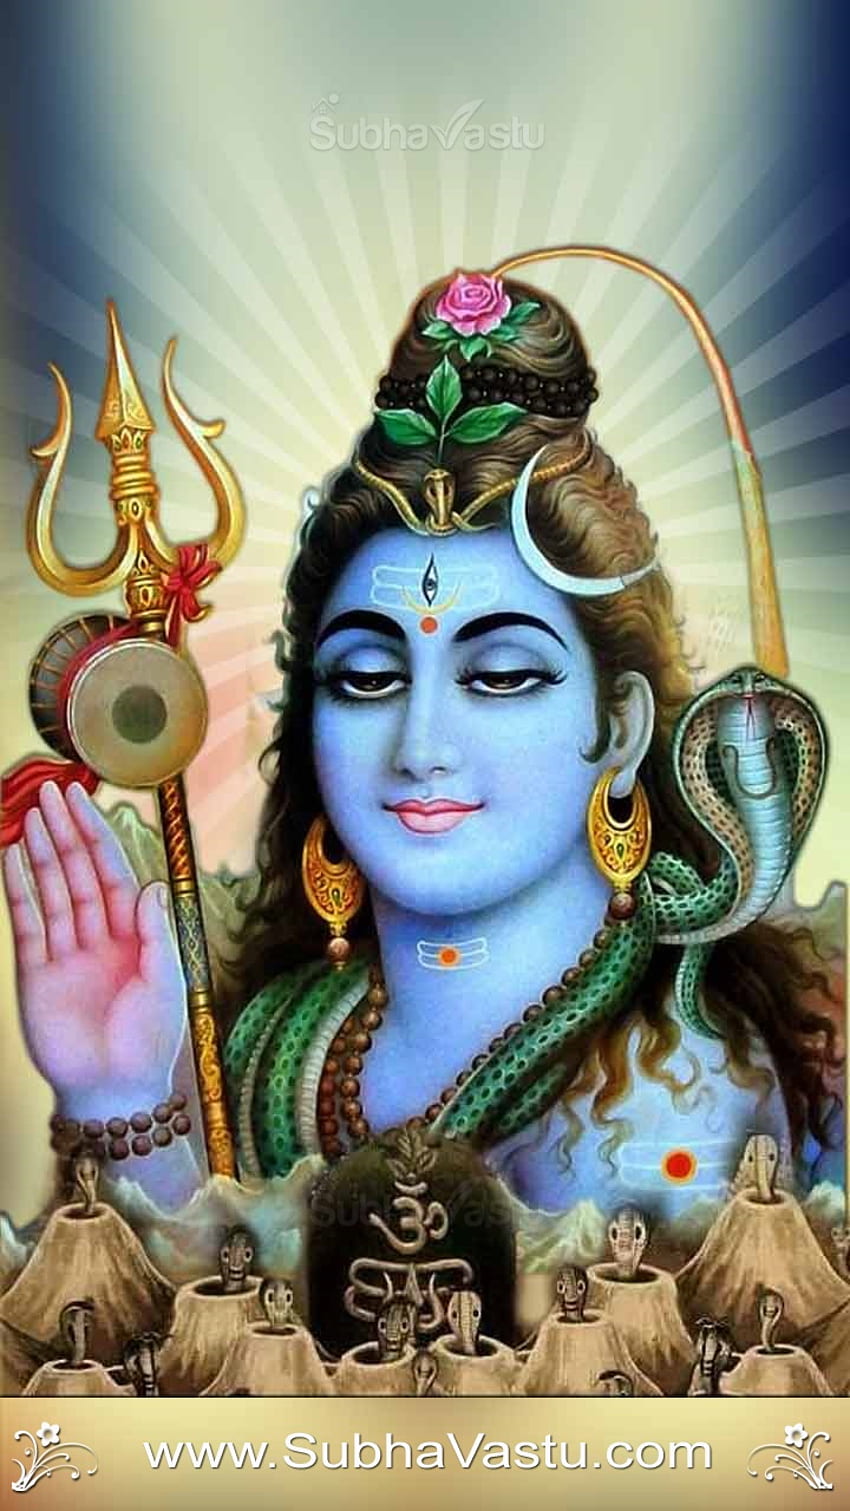 Subhavastu - Spiritual God Mobile - Category: Siva - : Lord Shiva ...